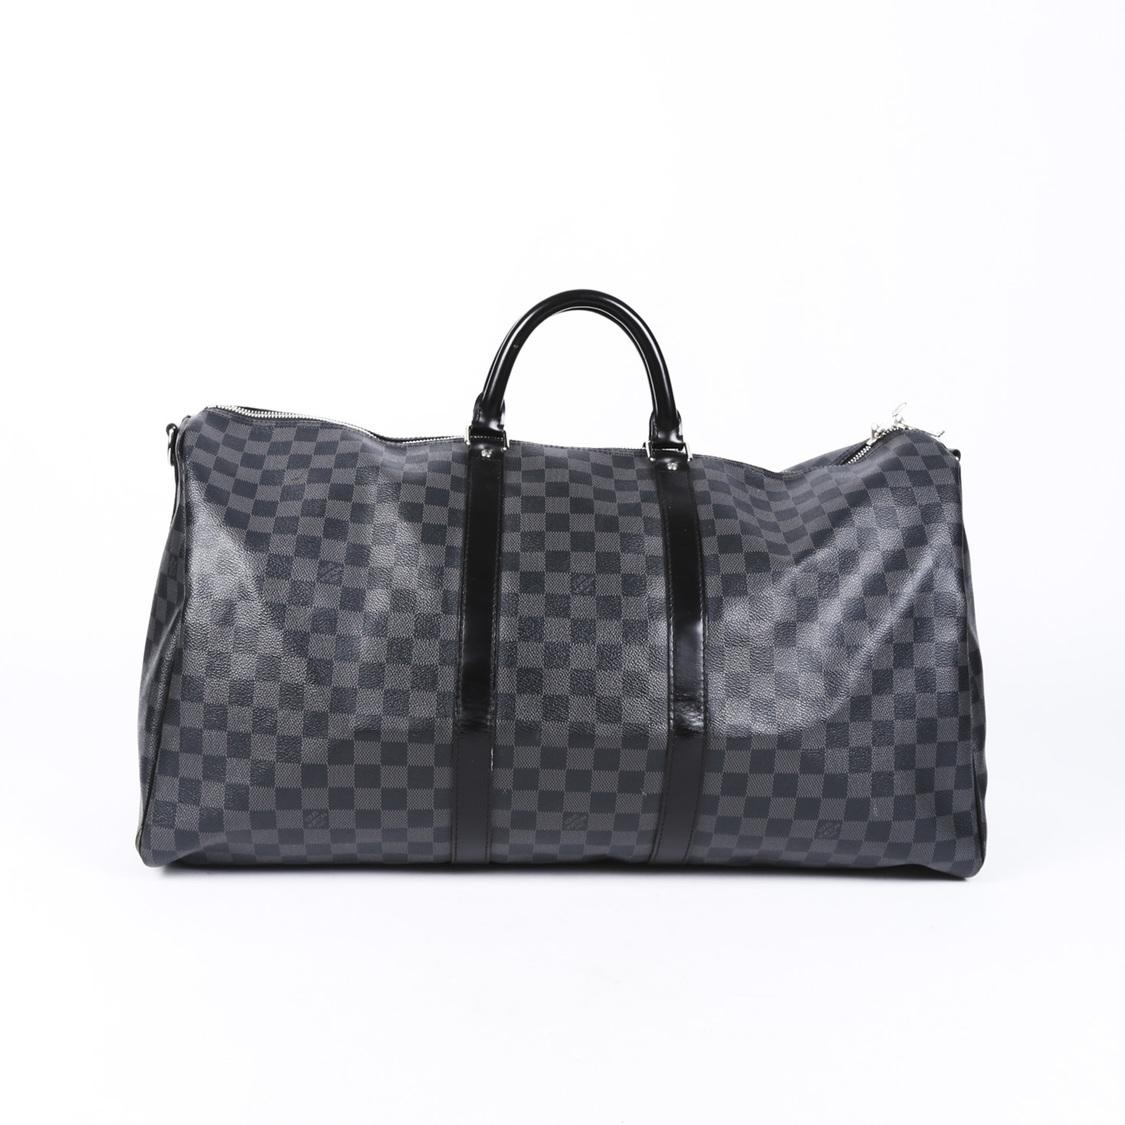 Louis Vuitton Canvas Keepall Bandouliere 55 Damier Graphite Travel Bag in Black/Gray (Black) - Lyst